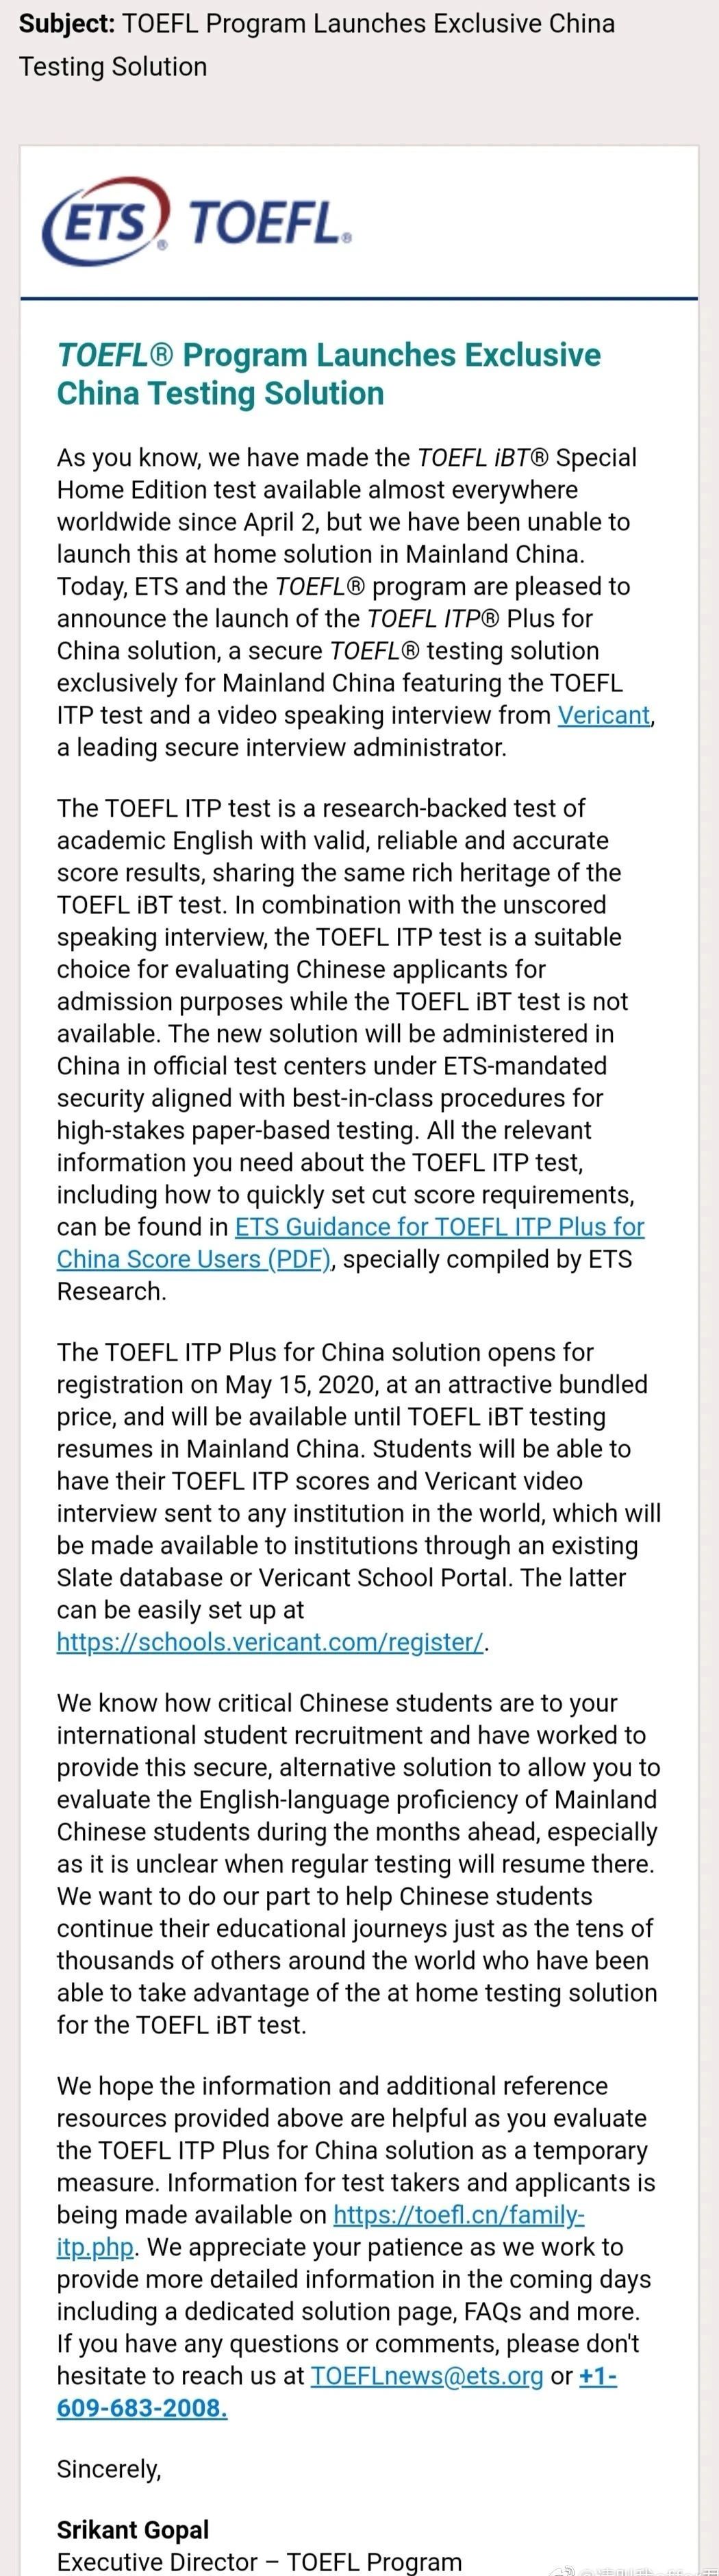 ETS官方推出中国大陆考生特别版TOEFL ITP Plus考试！